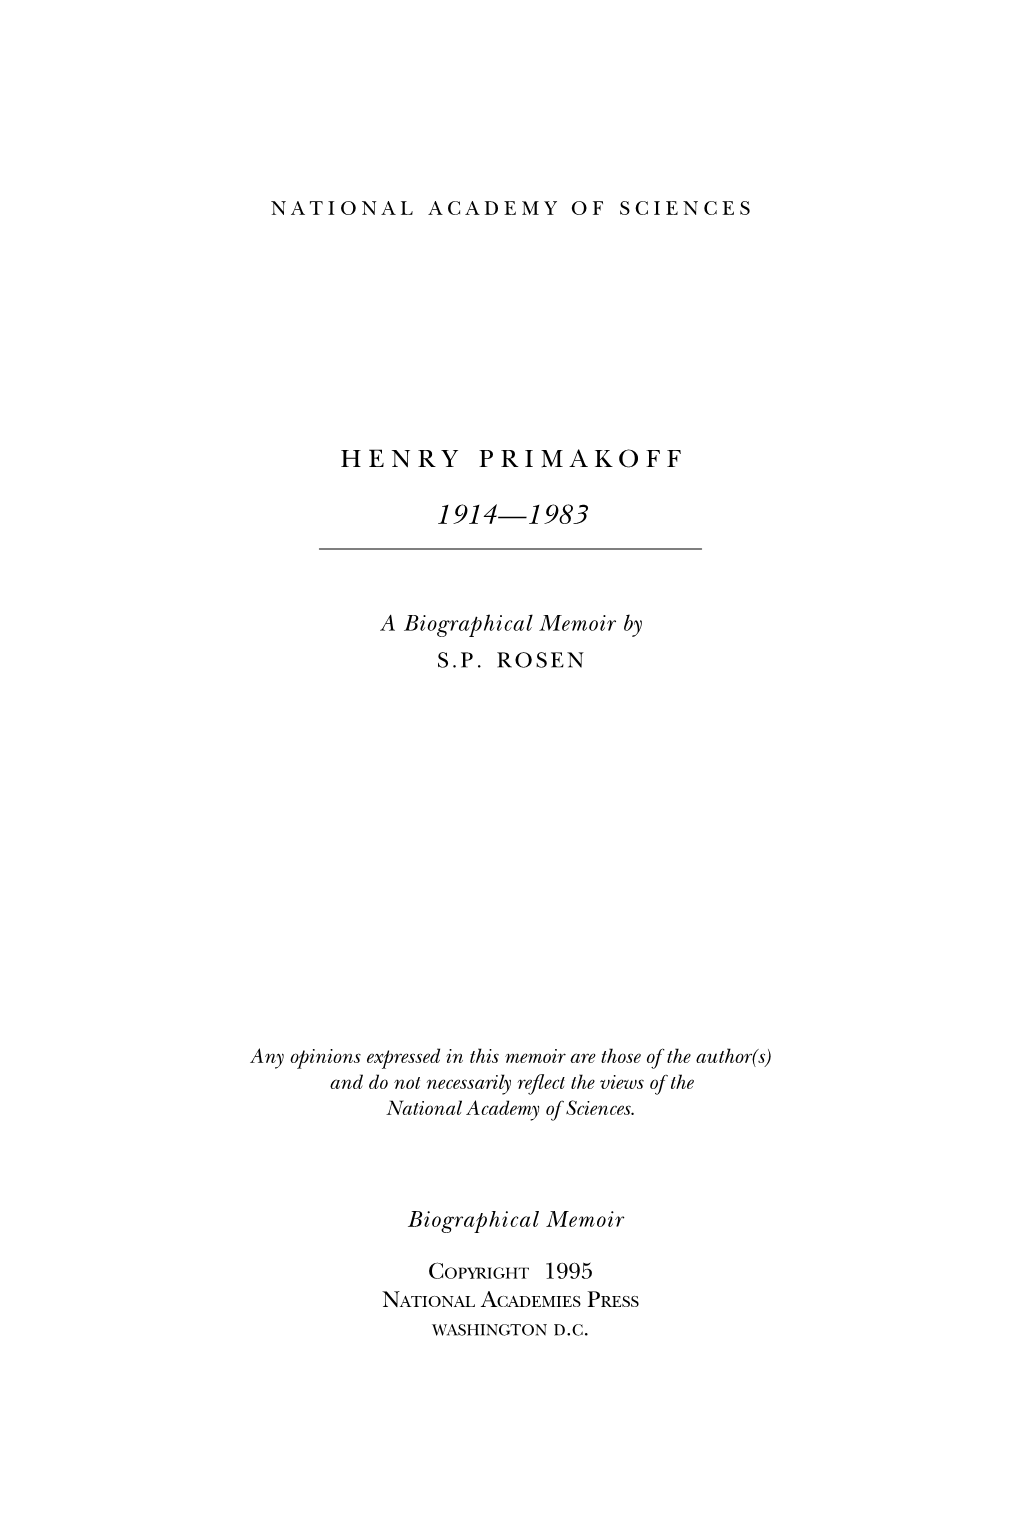 Henry Primakoff